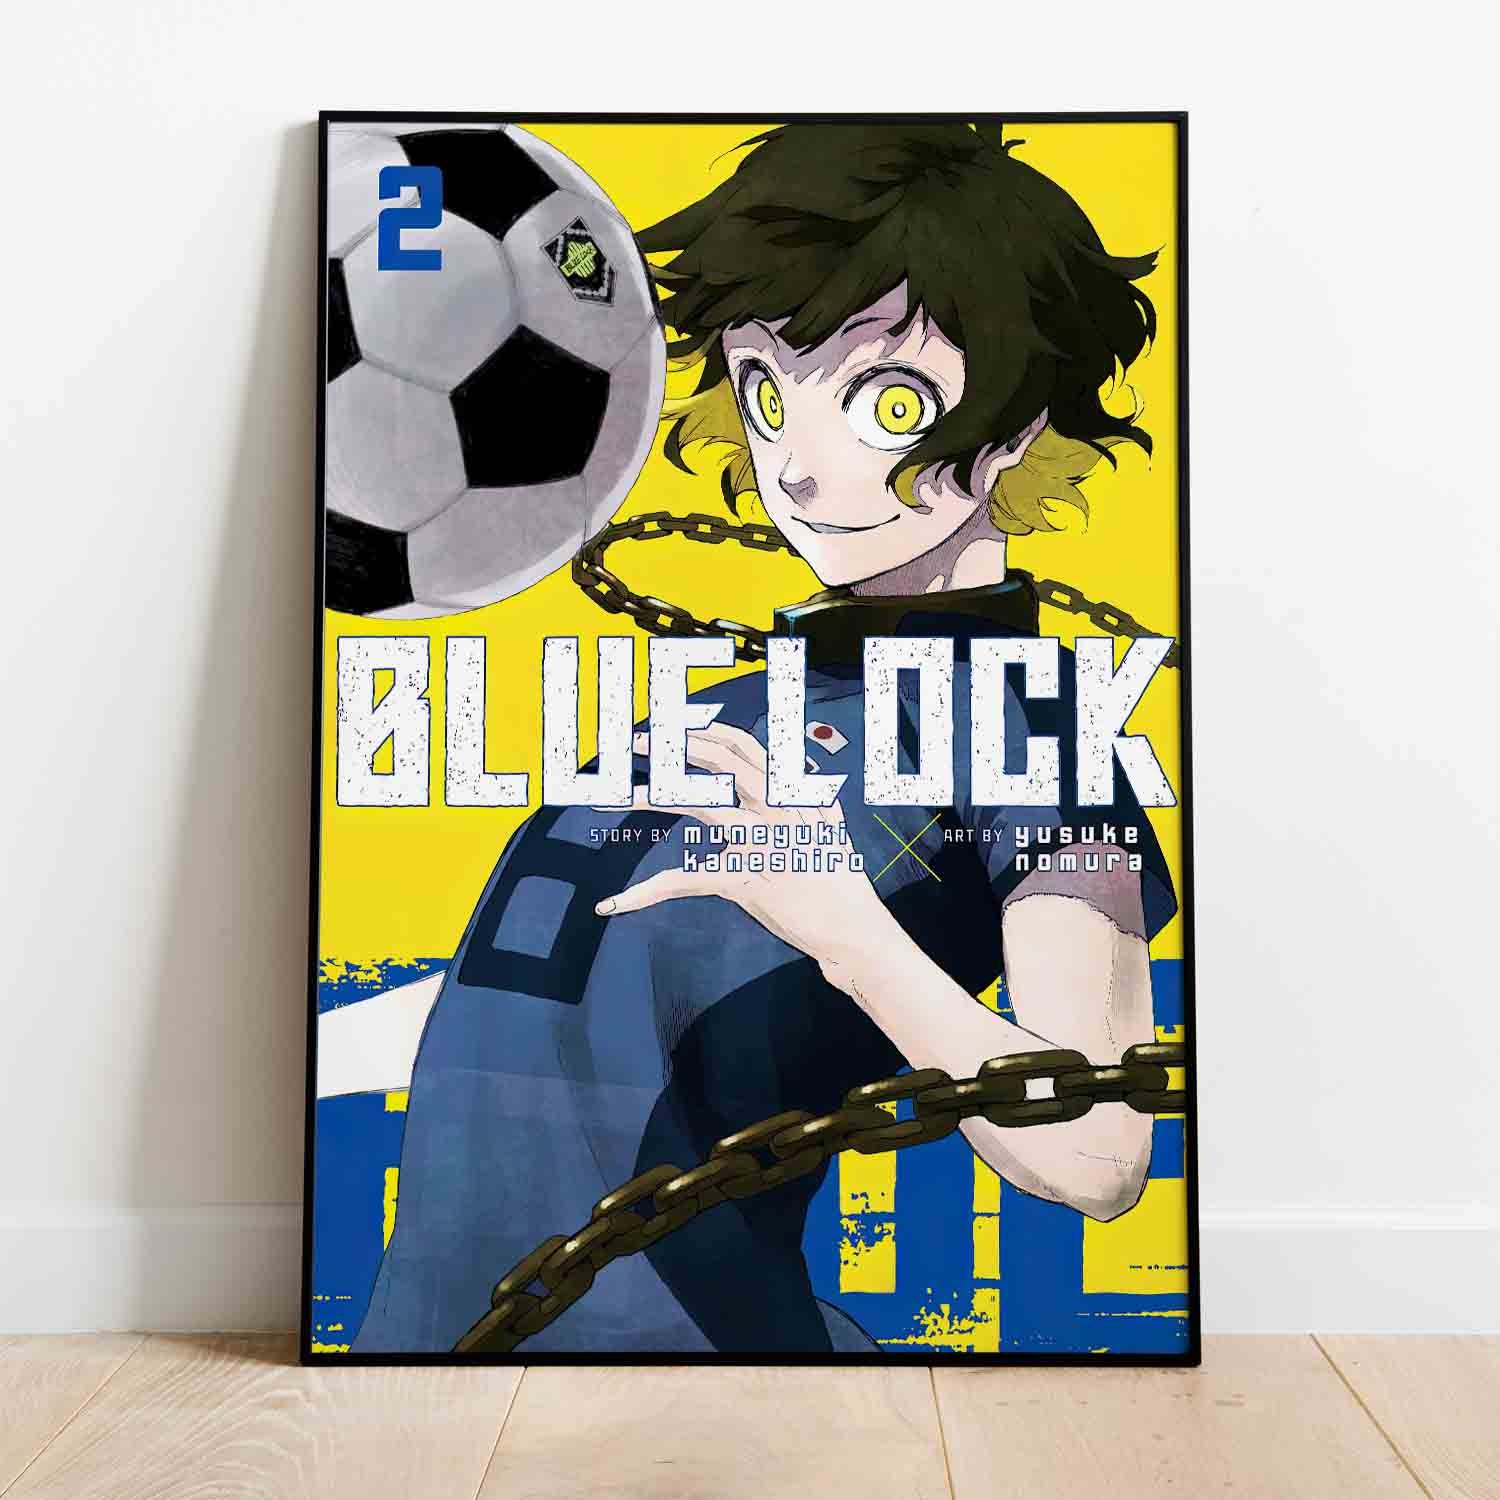 Blue Lock ganha novo visual - Anime United